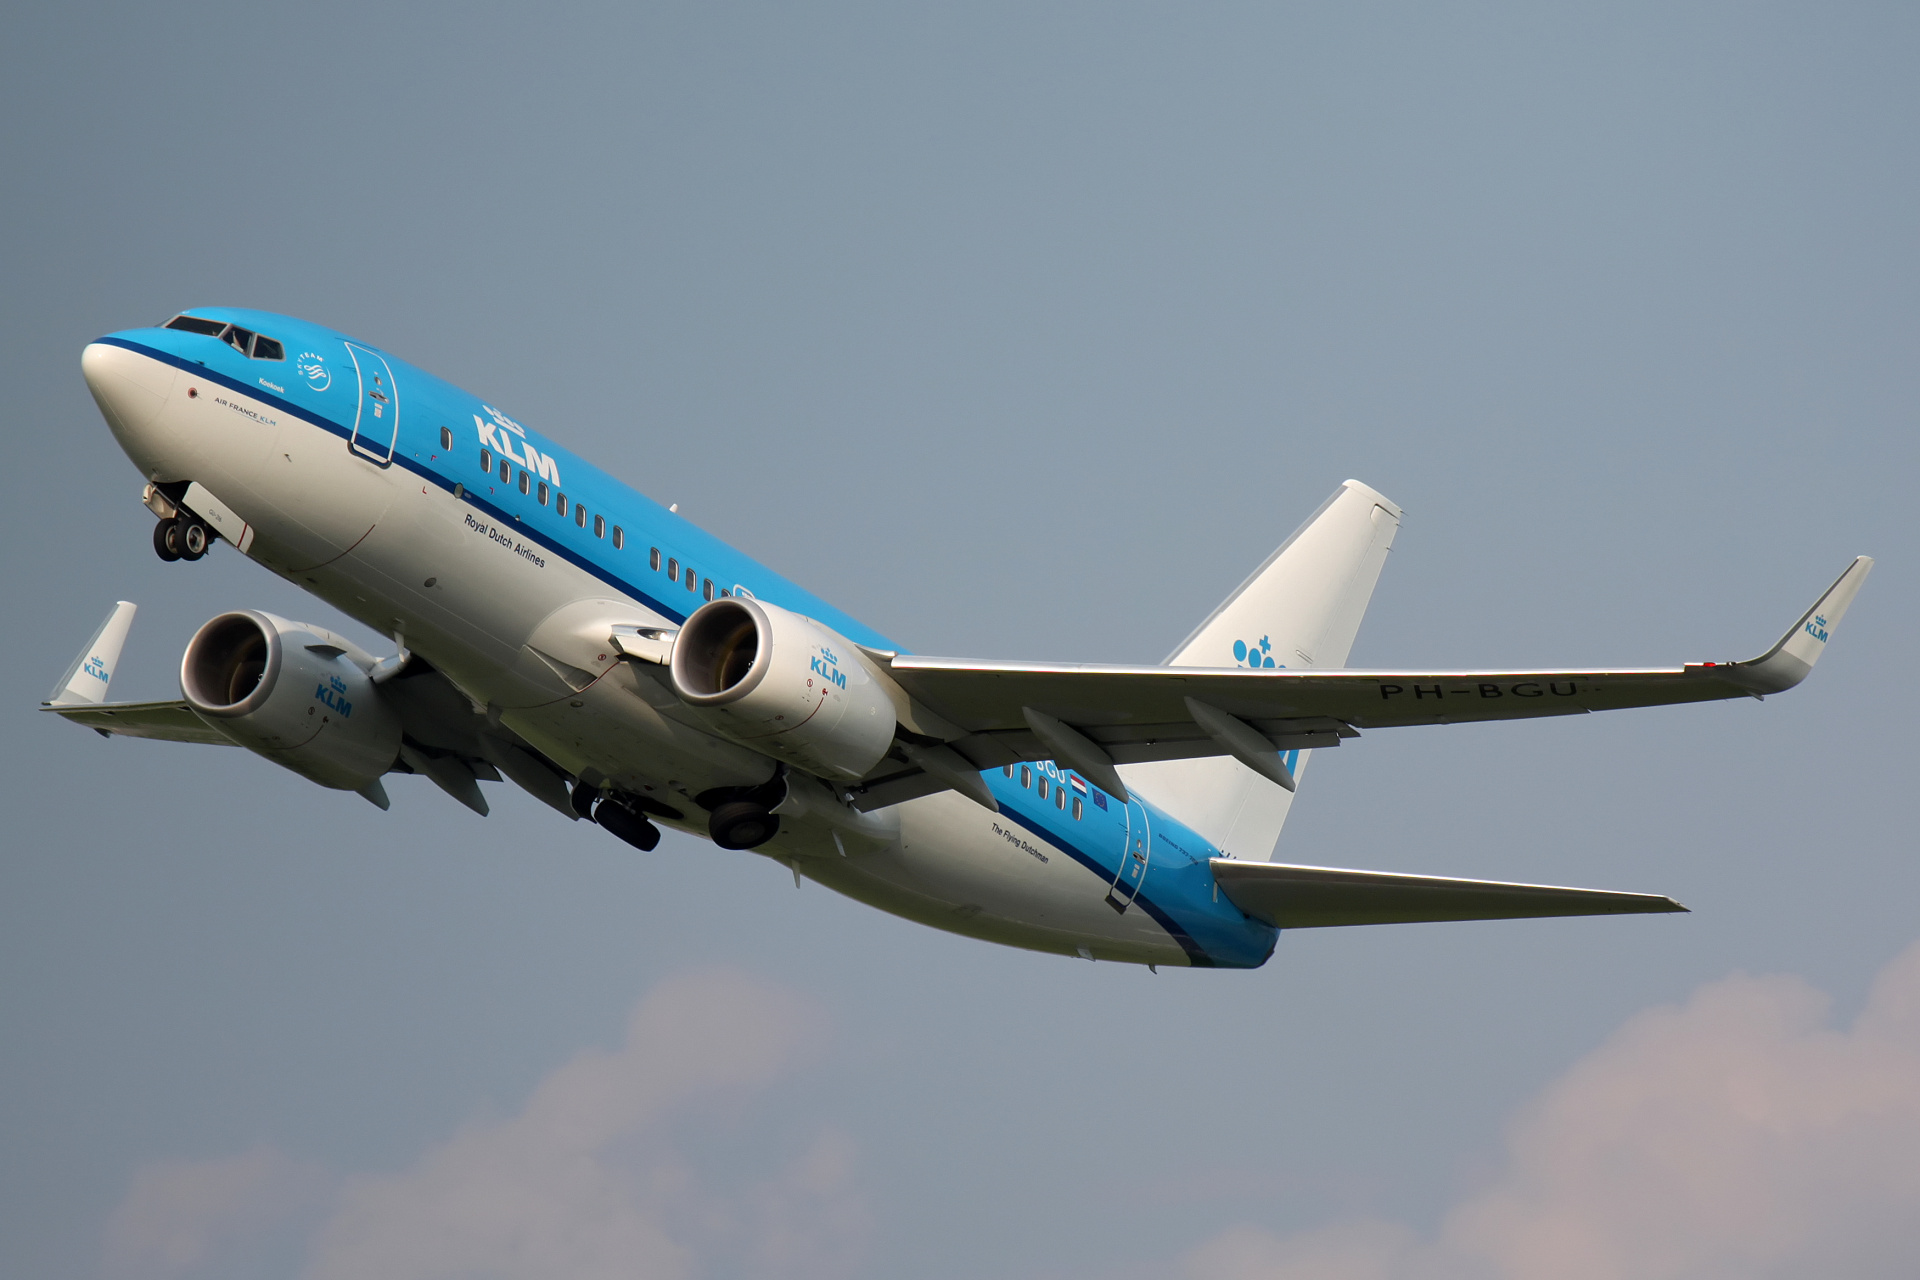 PH-BGU (Aircraft » EPWA Spotting » Boeing 737-700 » KLM Royal Dutch Airlines)